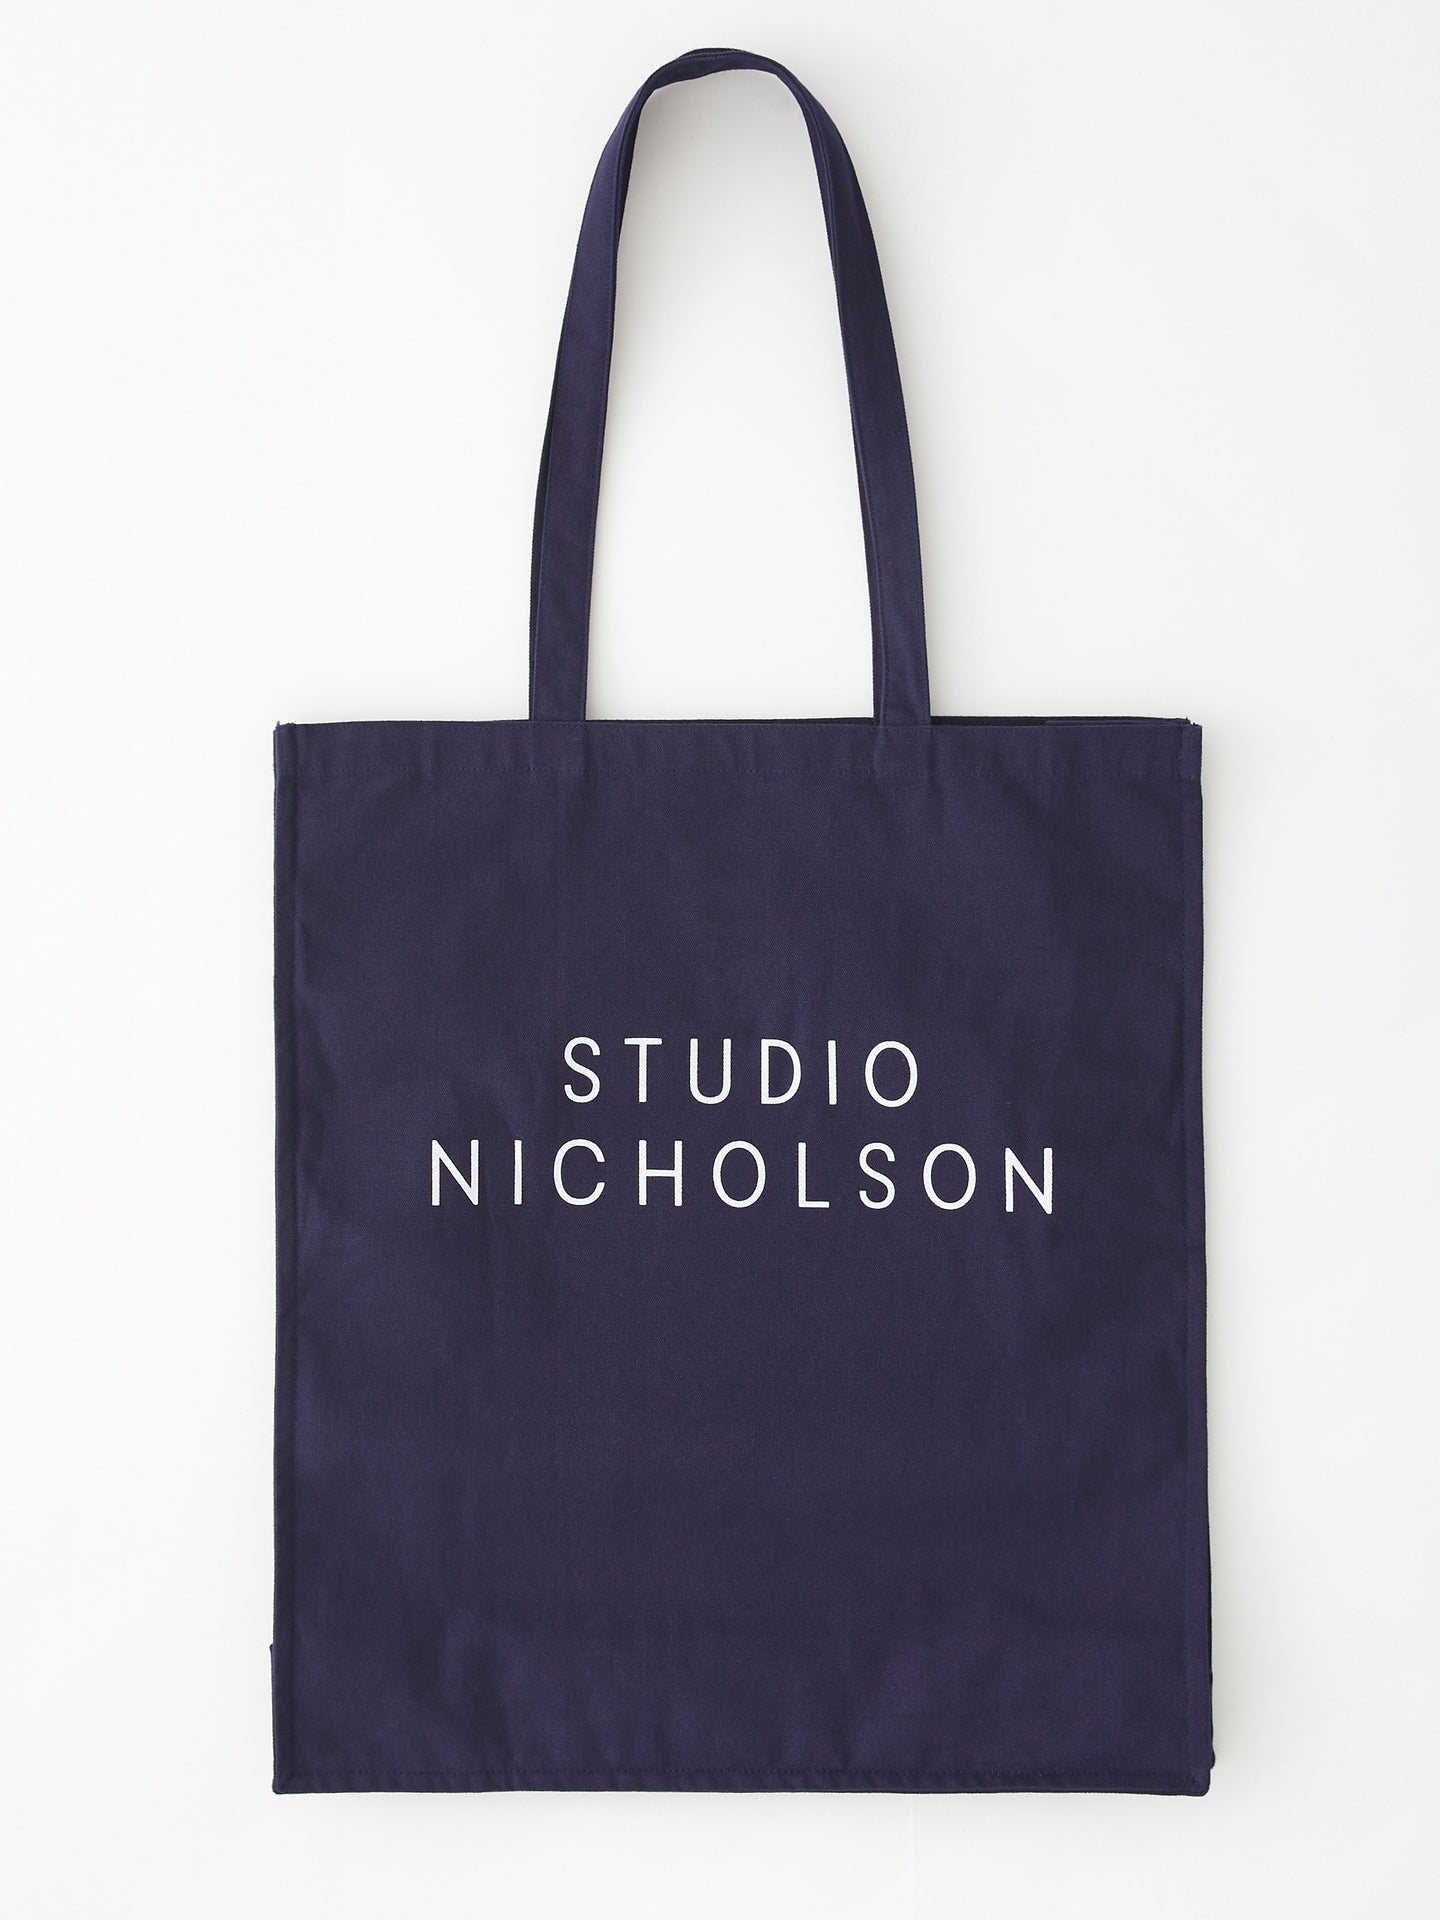 Studio Nicholson Standard Tote Bag in Dark Navy